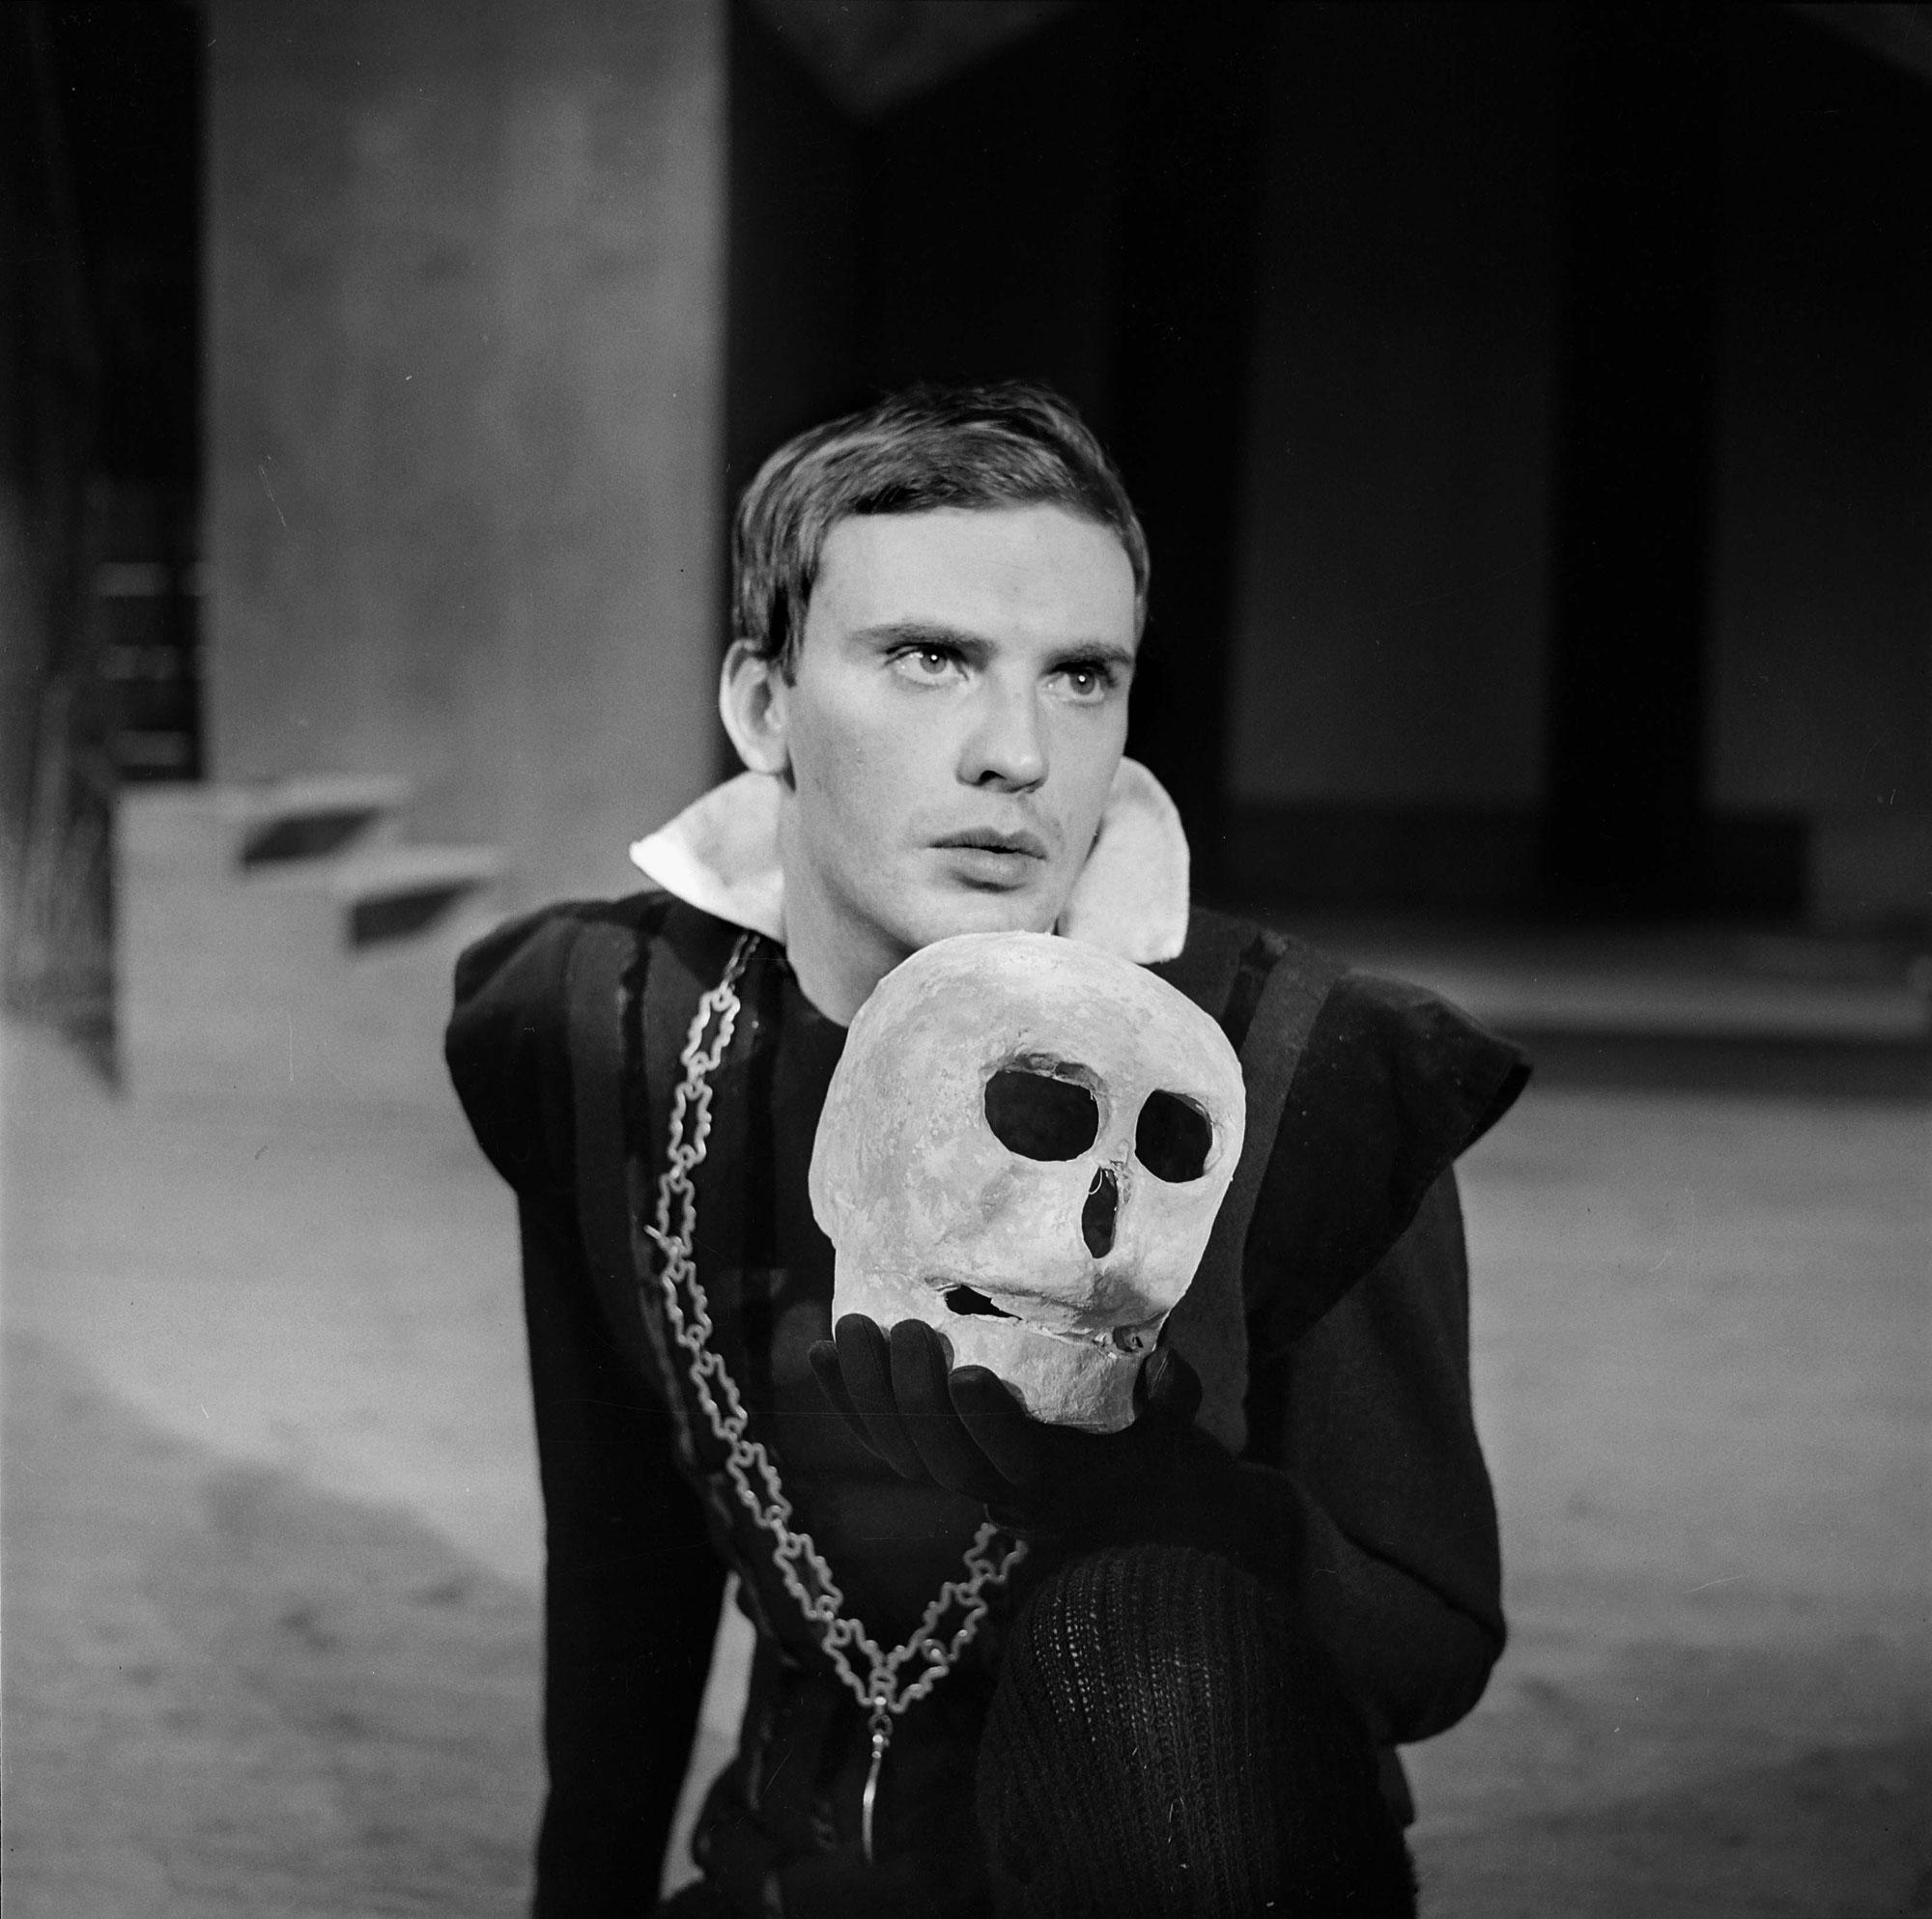 Jean-Louis Trintignant dans "Hamlet" (1960) [Roger-Viollet/AFP - Lipnitzki]